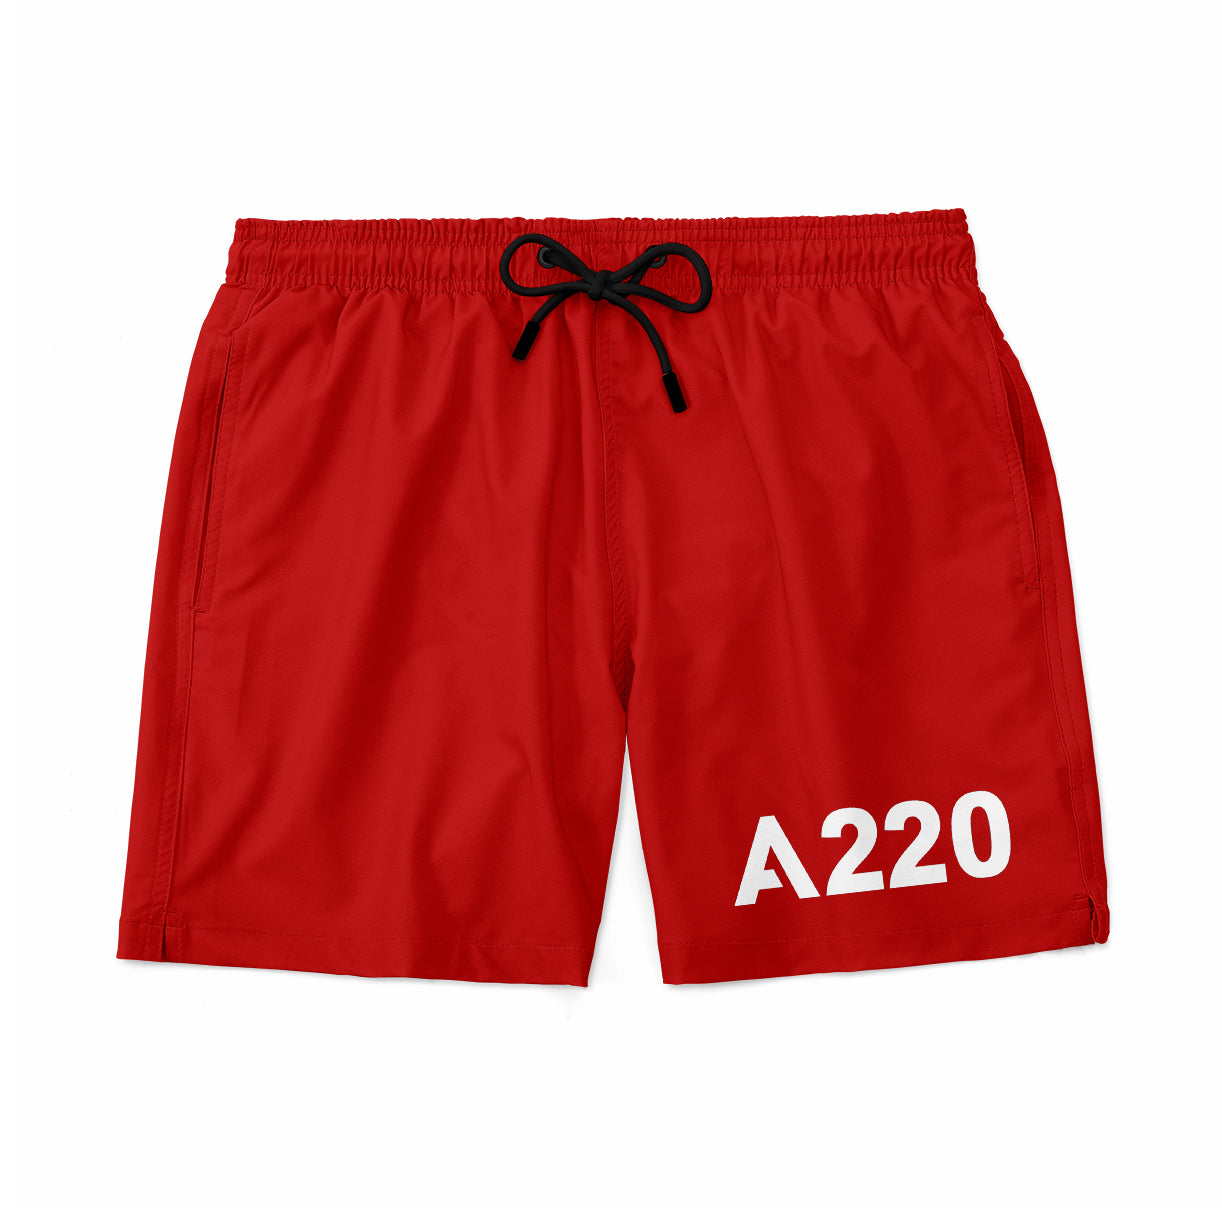 A220 Flat Text Designed Swim Trunks & Shorts